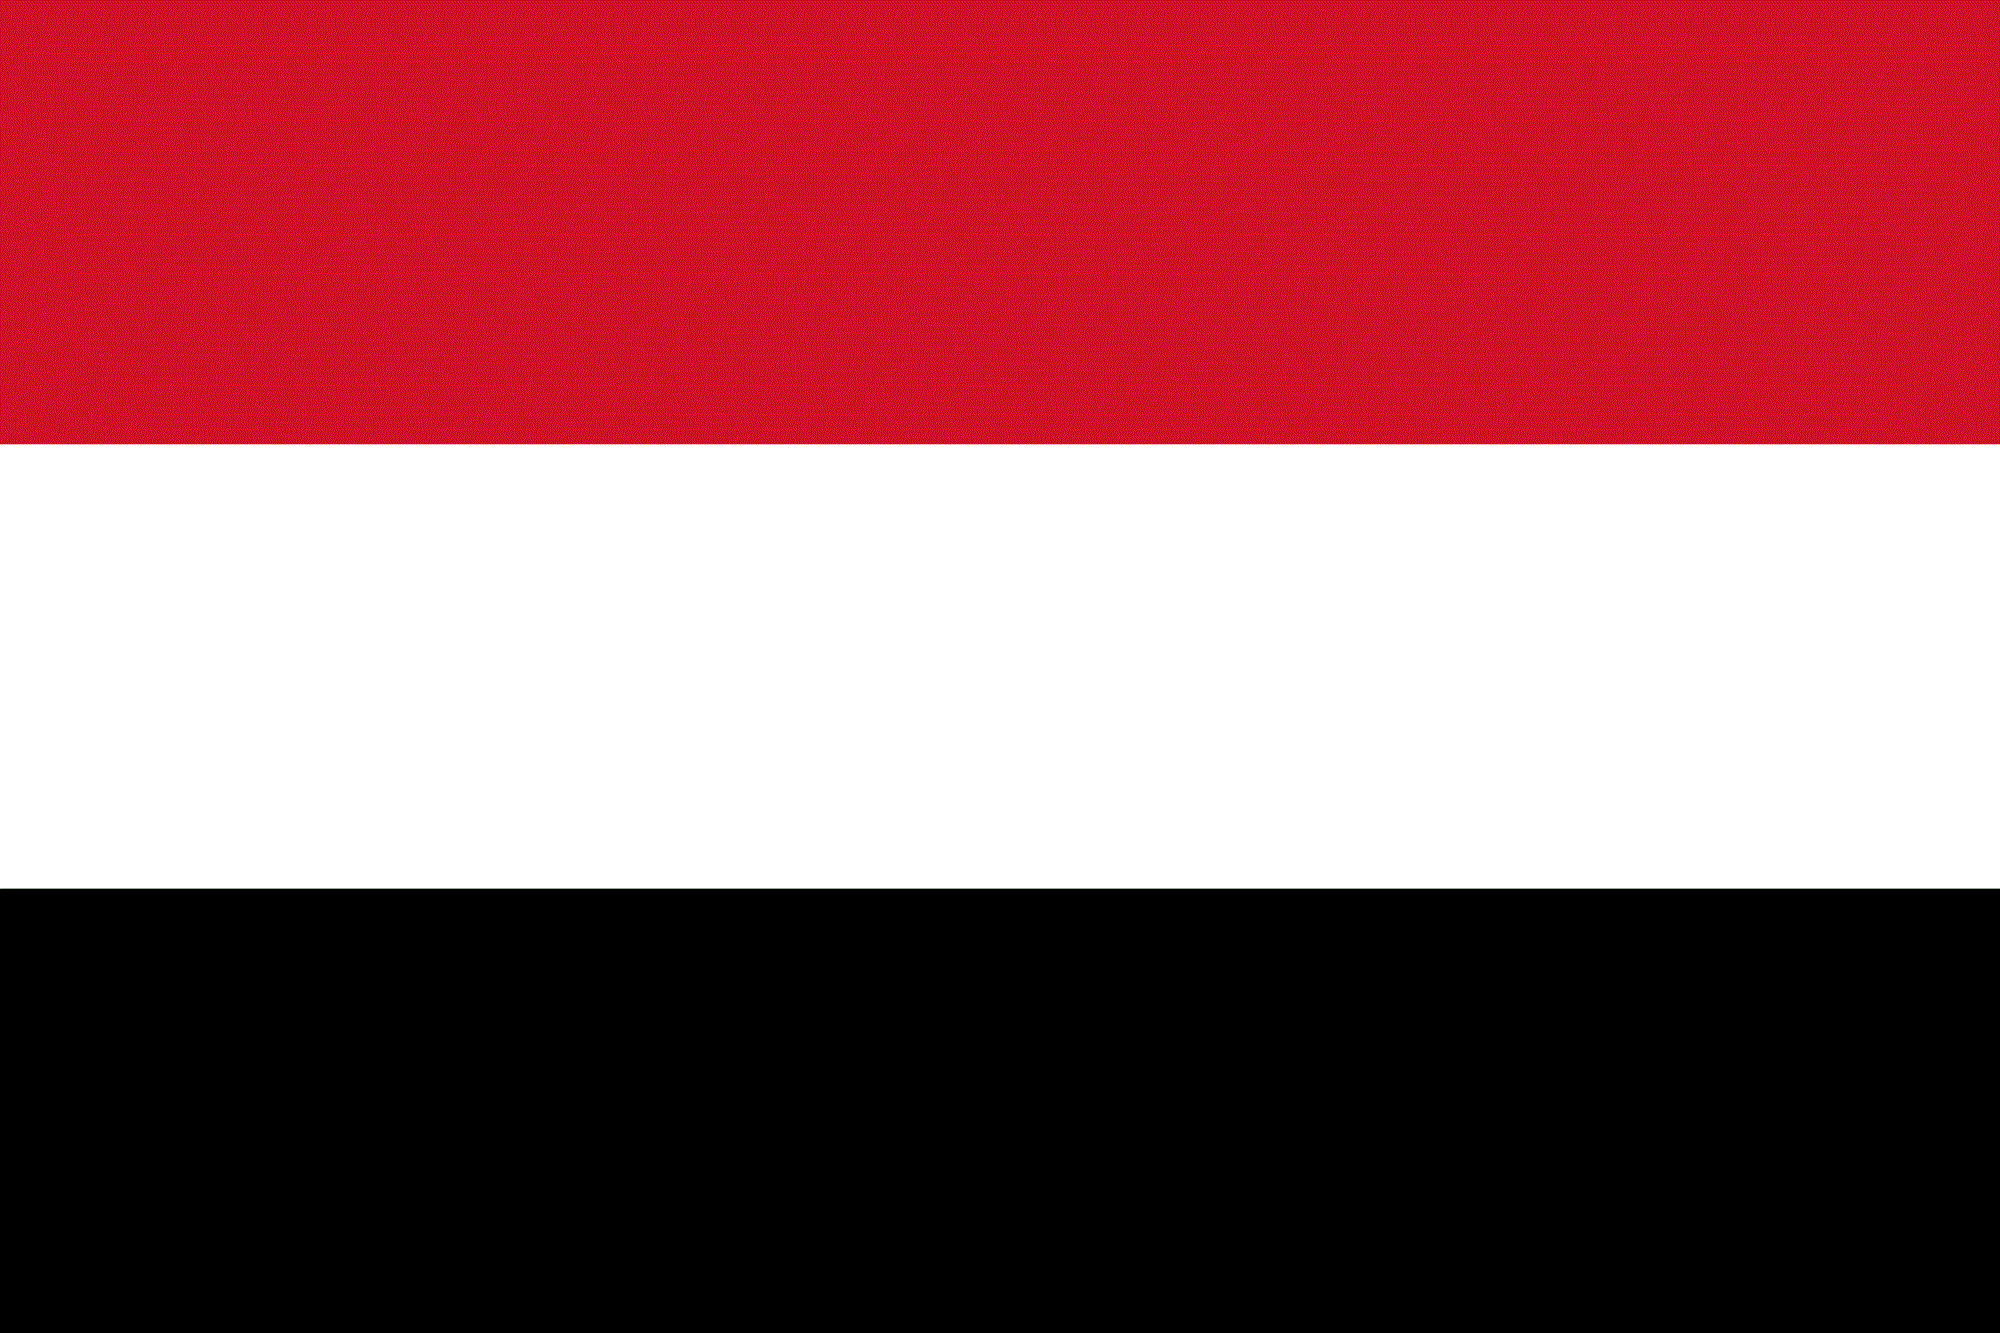 Yemen, Republic of